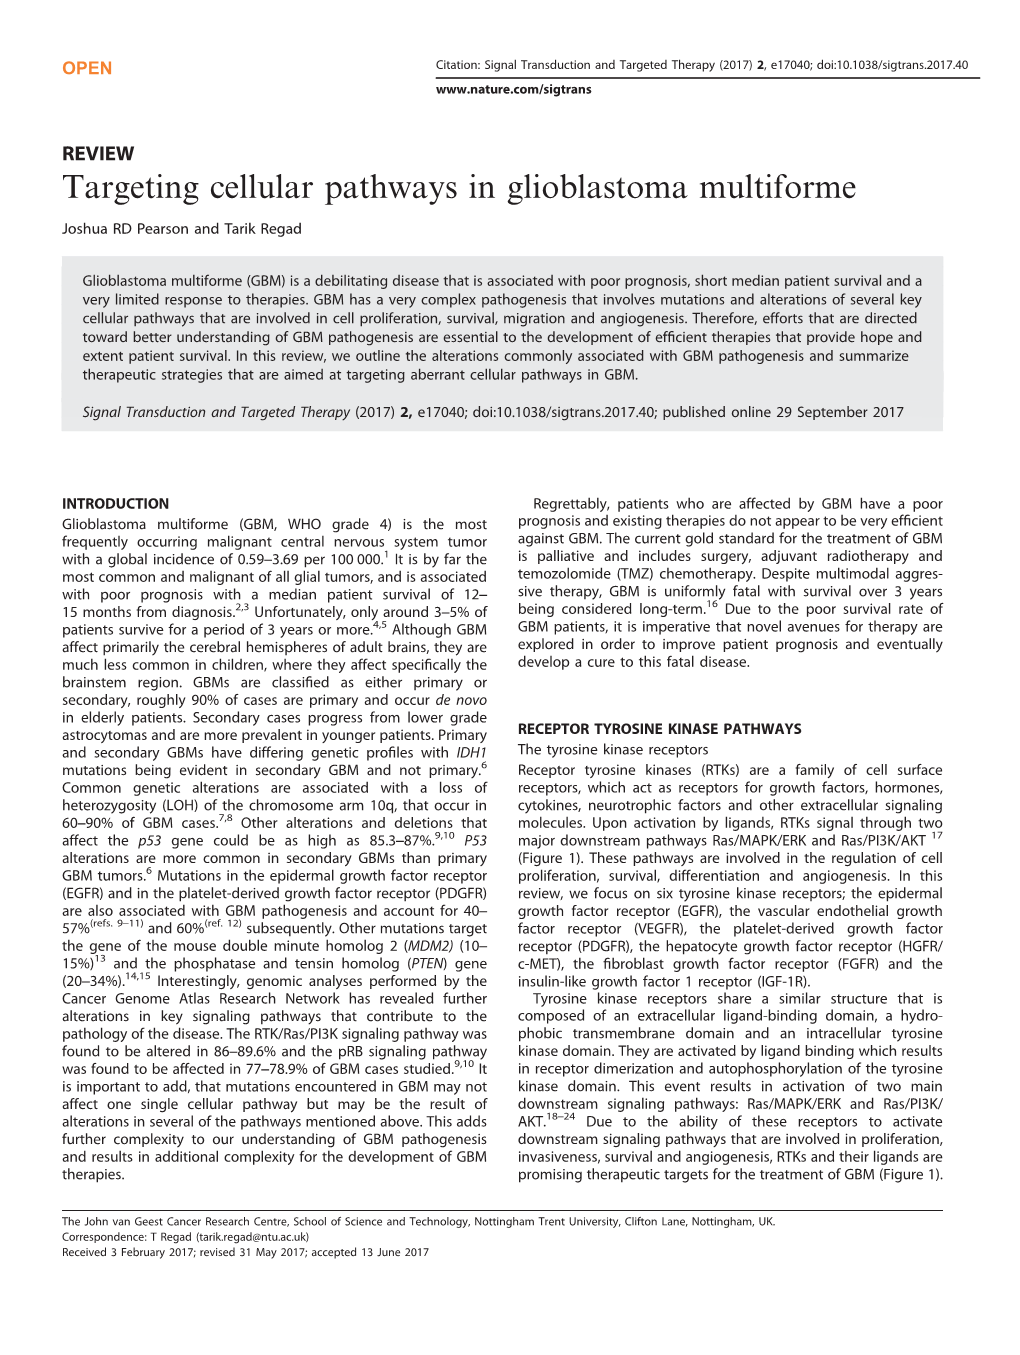 Targeting Cellular Pathways in Glioblastoma Multiforme